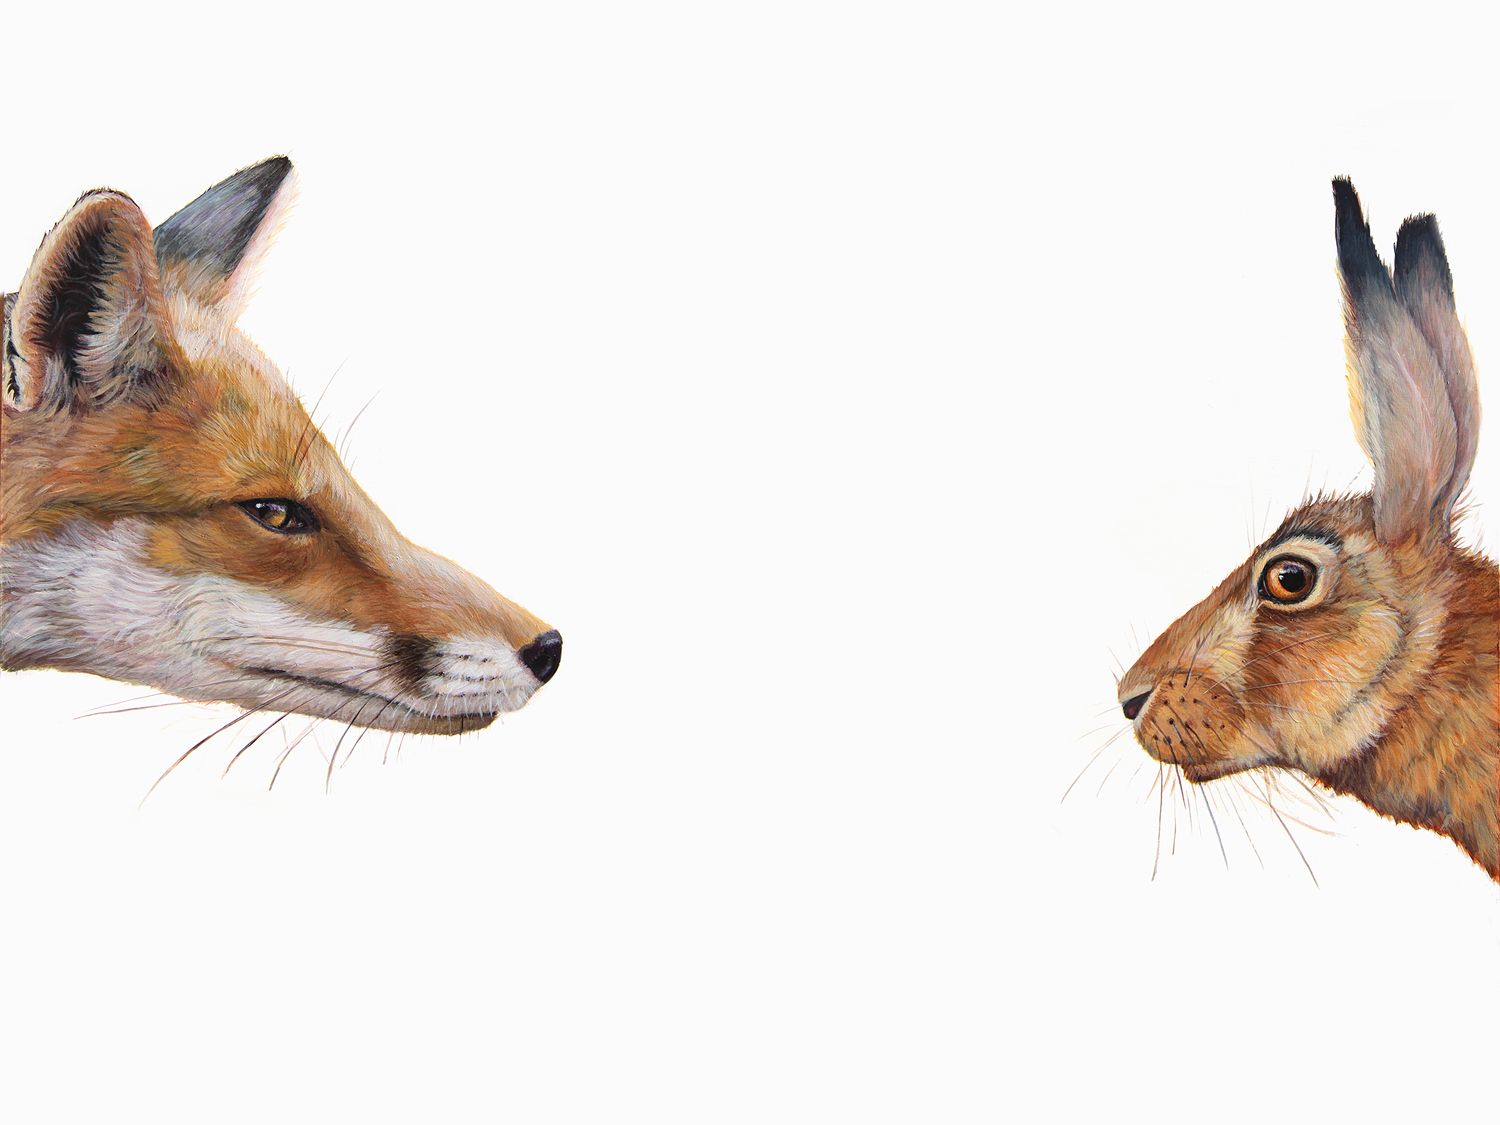 Top Predator: Fox & Hare by Hazel Mountford